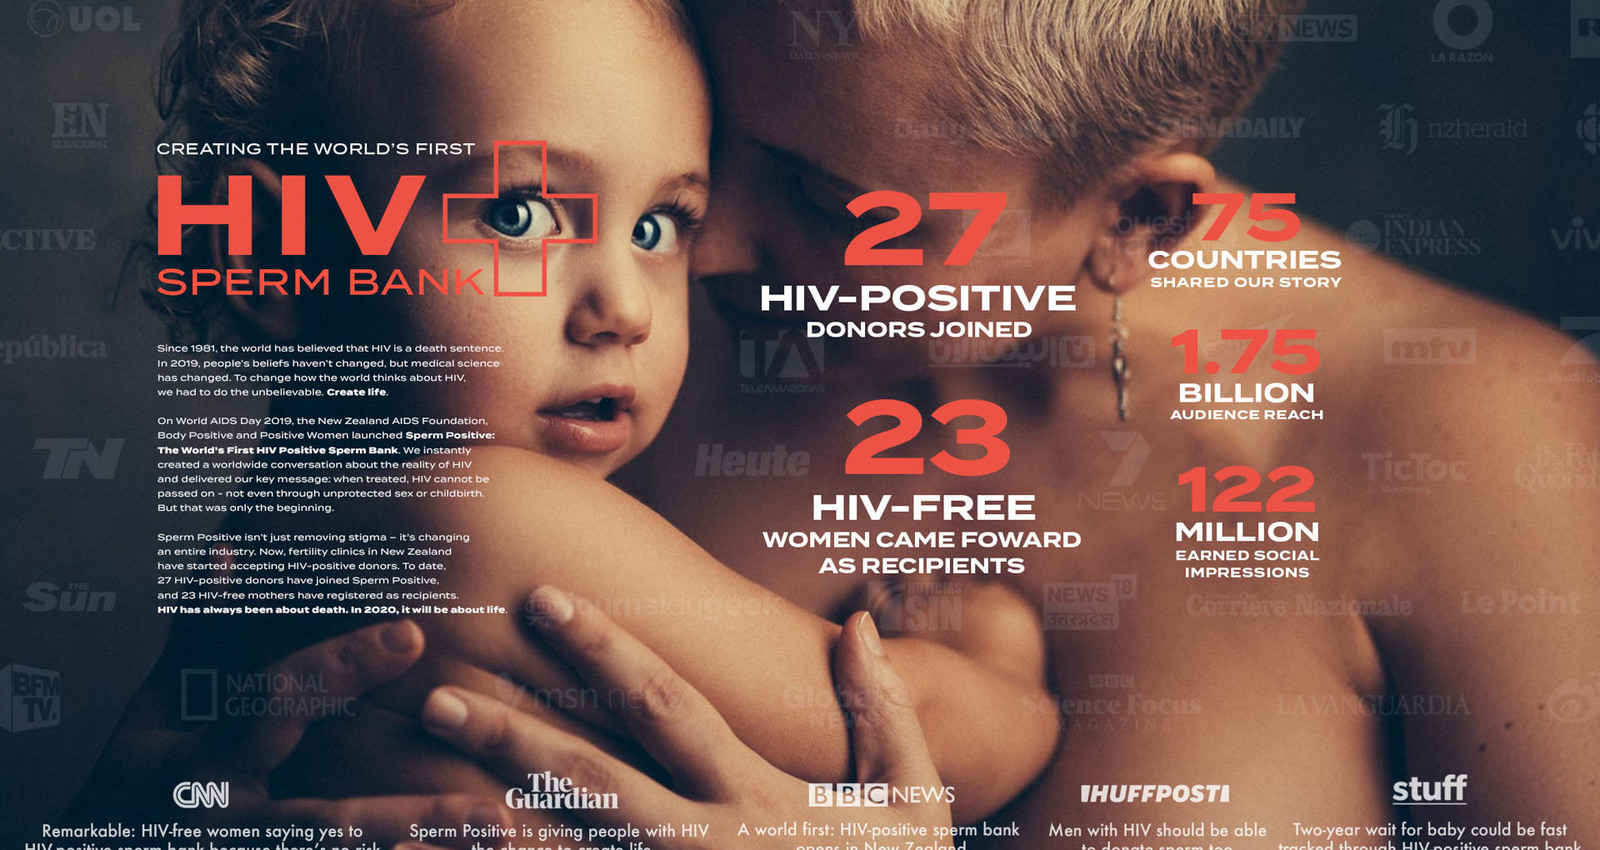 The HIV Positive Sperm Bank